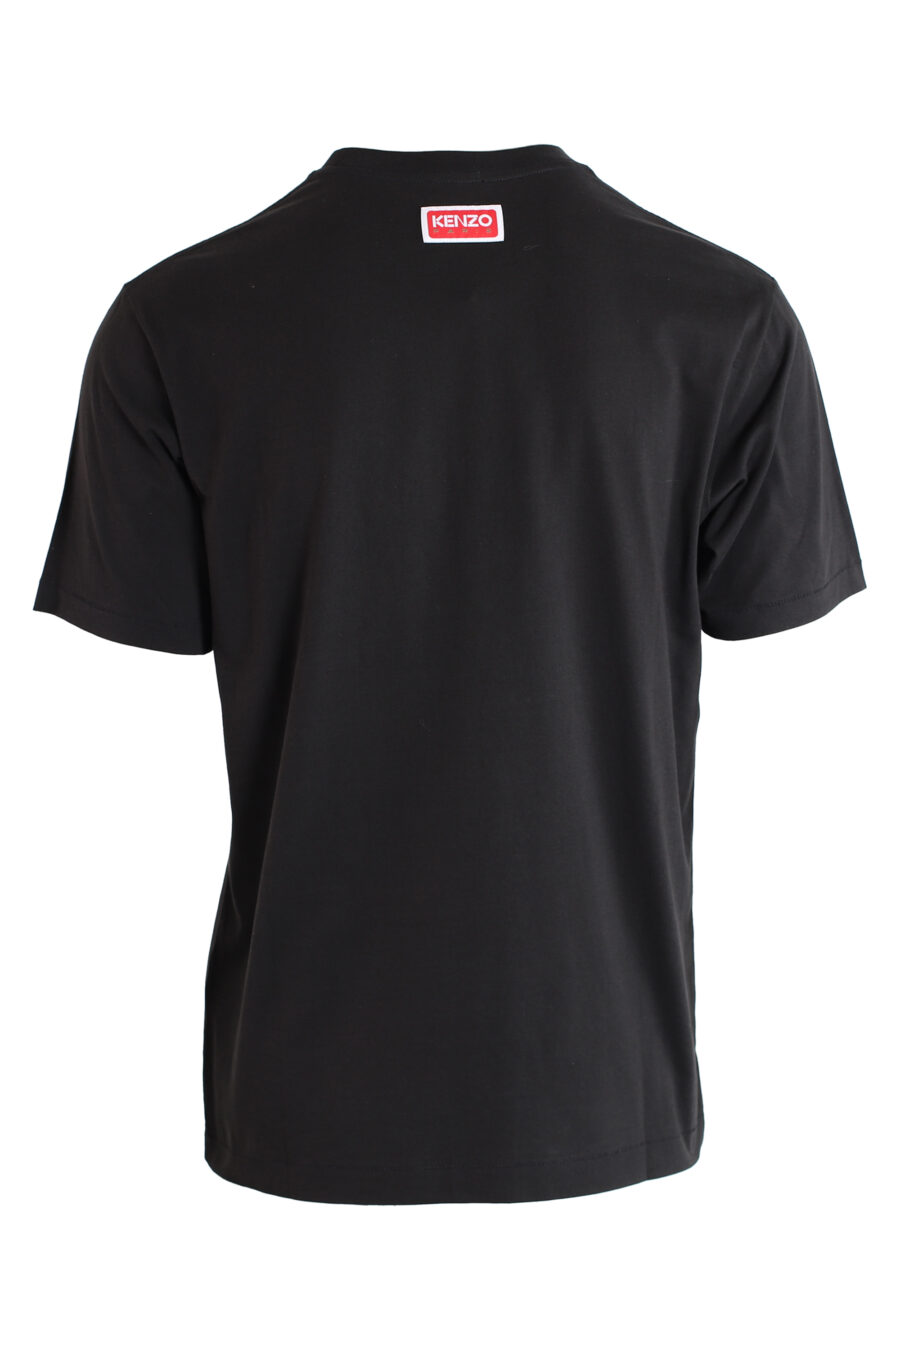 Black T-shirt with "flower" logo - IMG 3175